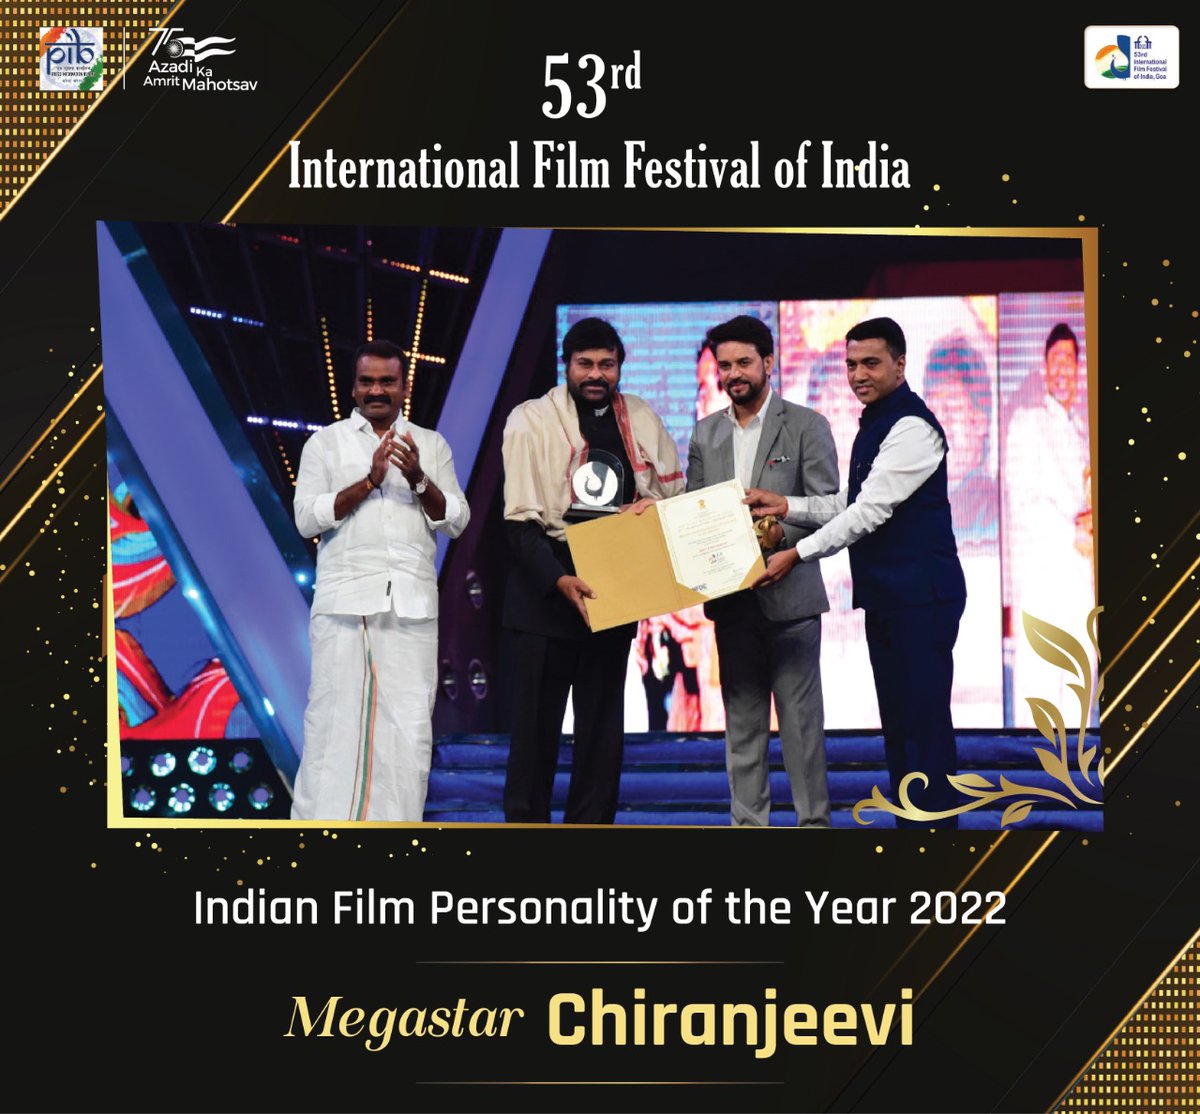 Indian Film Personality of the Year 2022 award - Megastar @KChiruTweets Garu
#MegastarChiranjeevi
#WaltairVeerayya
#IFFI #AnythingForFilms #IFFI53 
#IFFI53Goa #IFFI2022